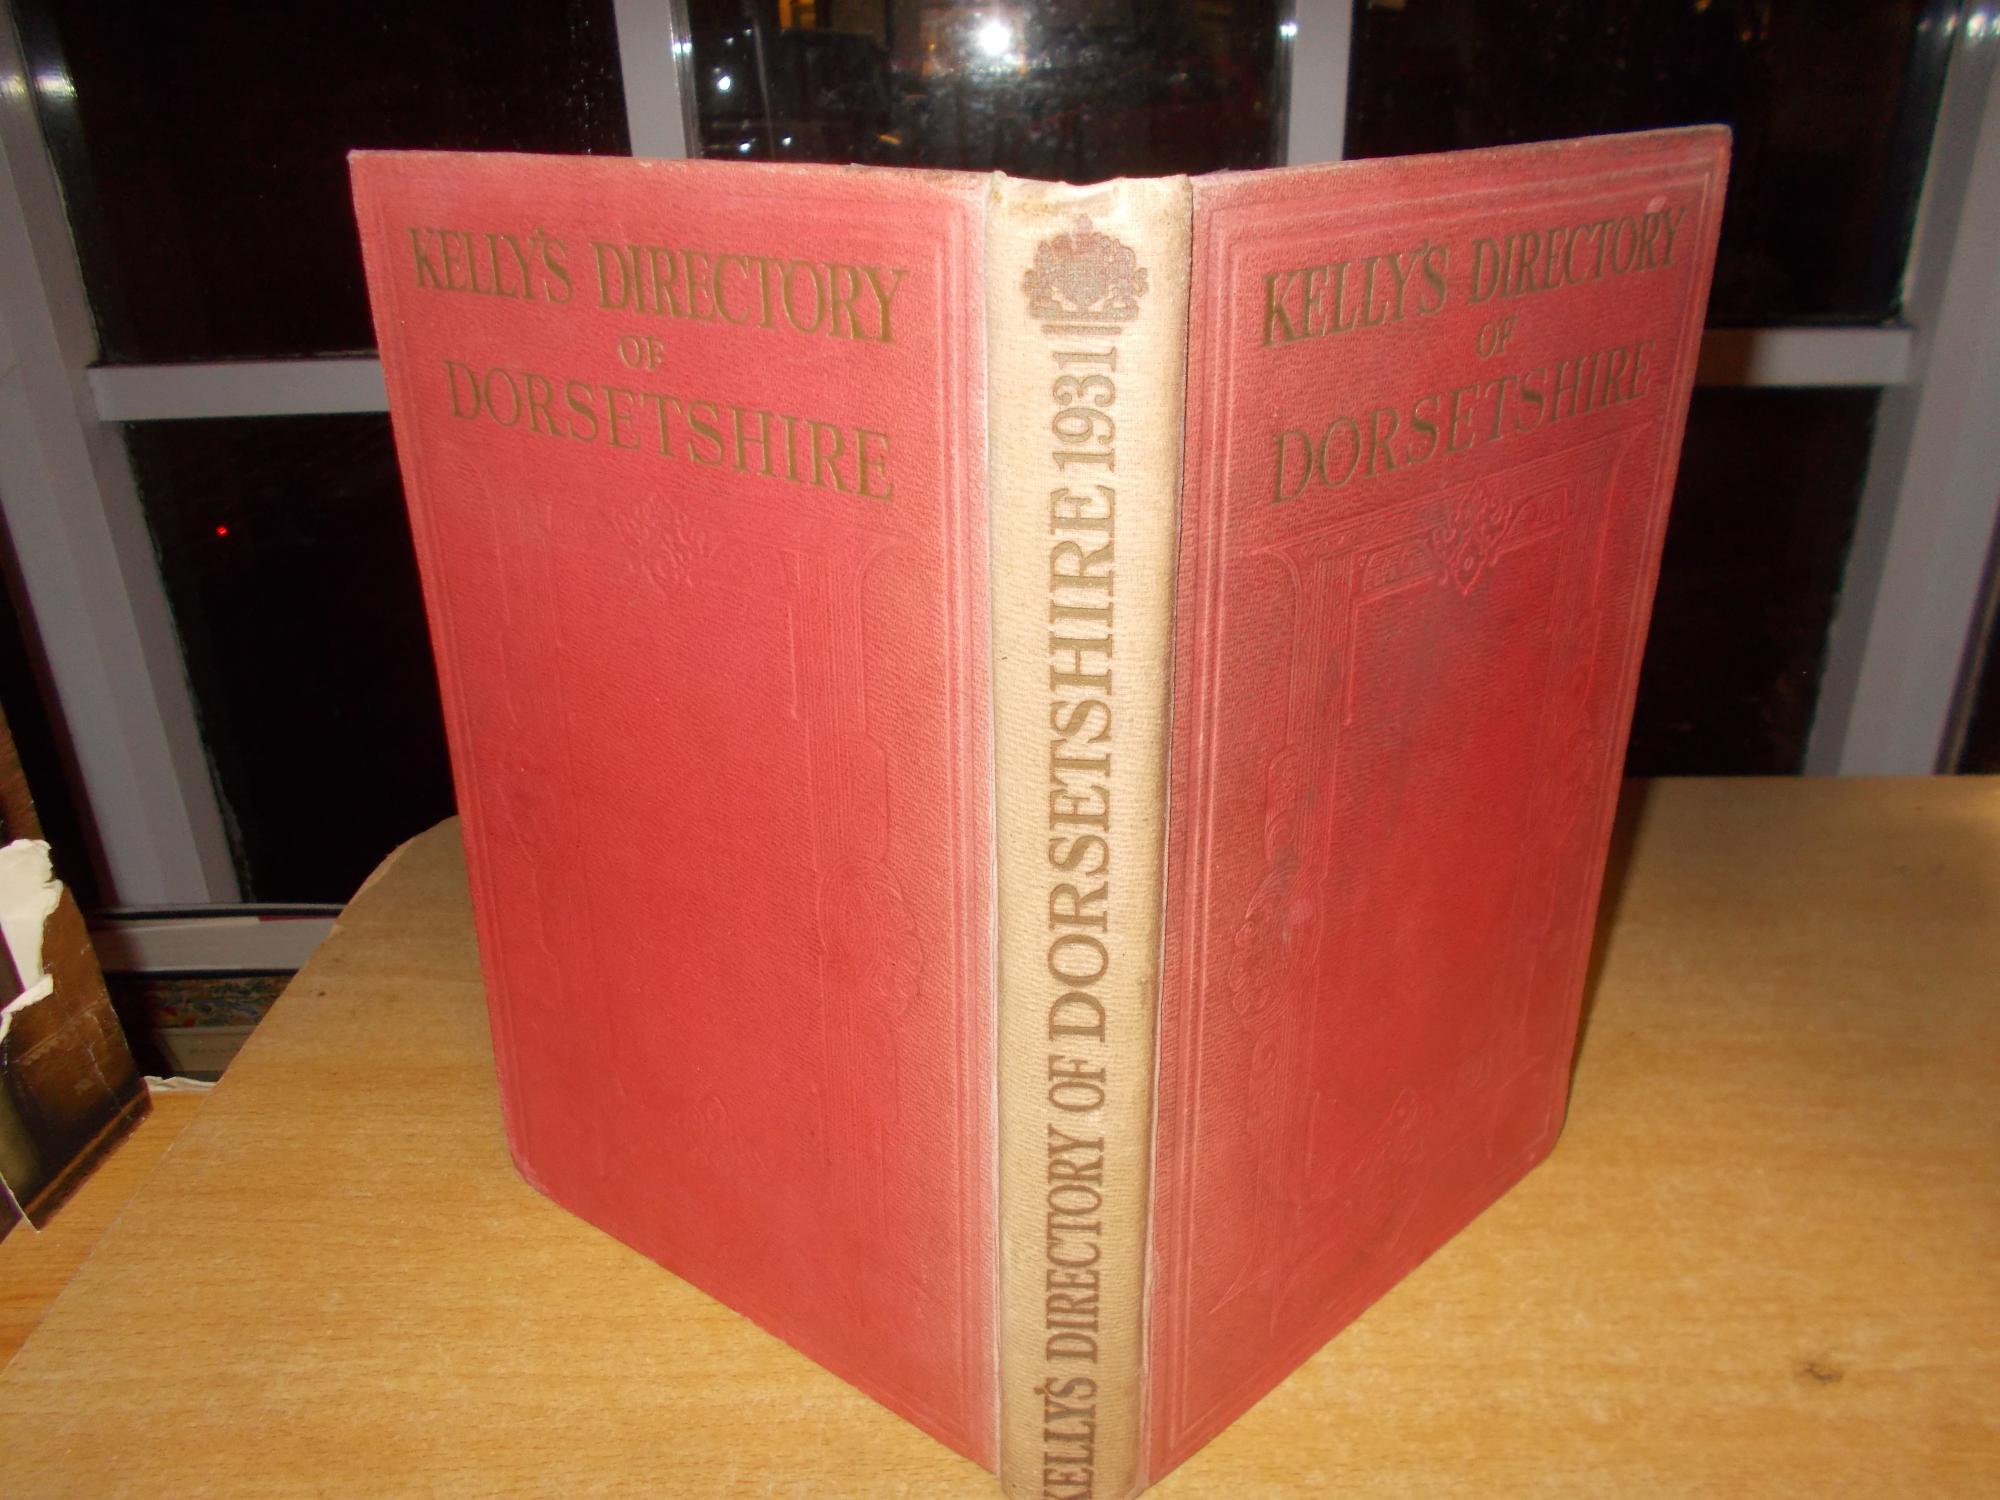 Kelly's Directory of Dorset 1931 CDROM 